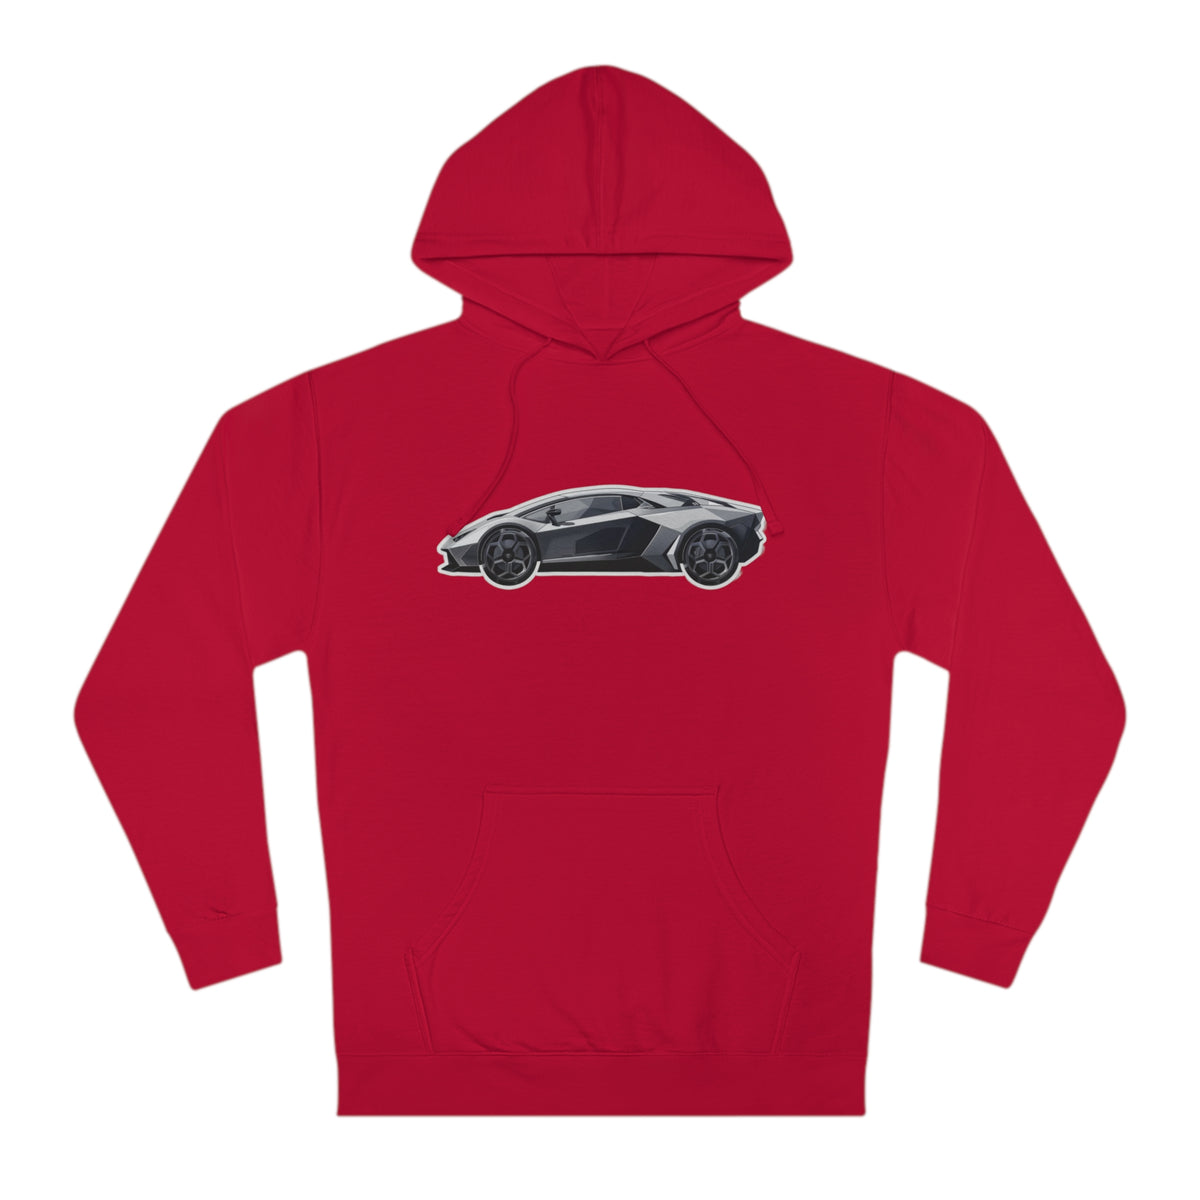 Monochrome Edge Futuristic Style for the Urban Drive Hoodie/Hooded Sweatshirt